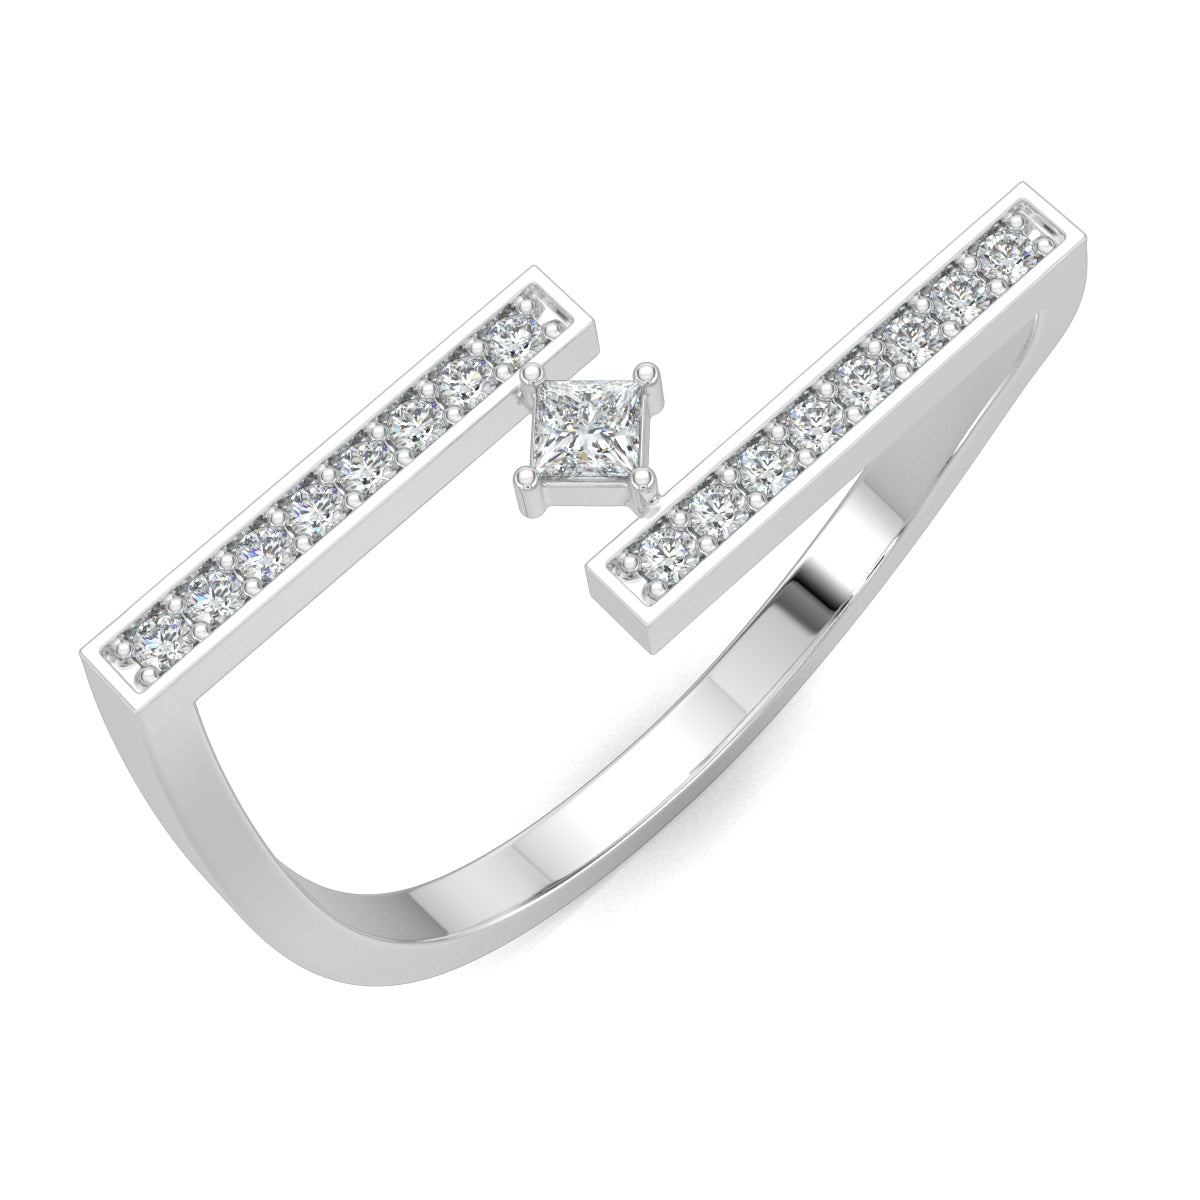 White Gold, Diamond Ring,  Natural diamond ring, Lab-grown diamond ring, everyday diamond ring, open-ended band ring, round diamond accents, princess-cut diamond center, timeless elegance, modern luxury.